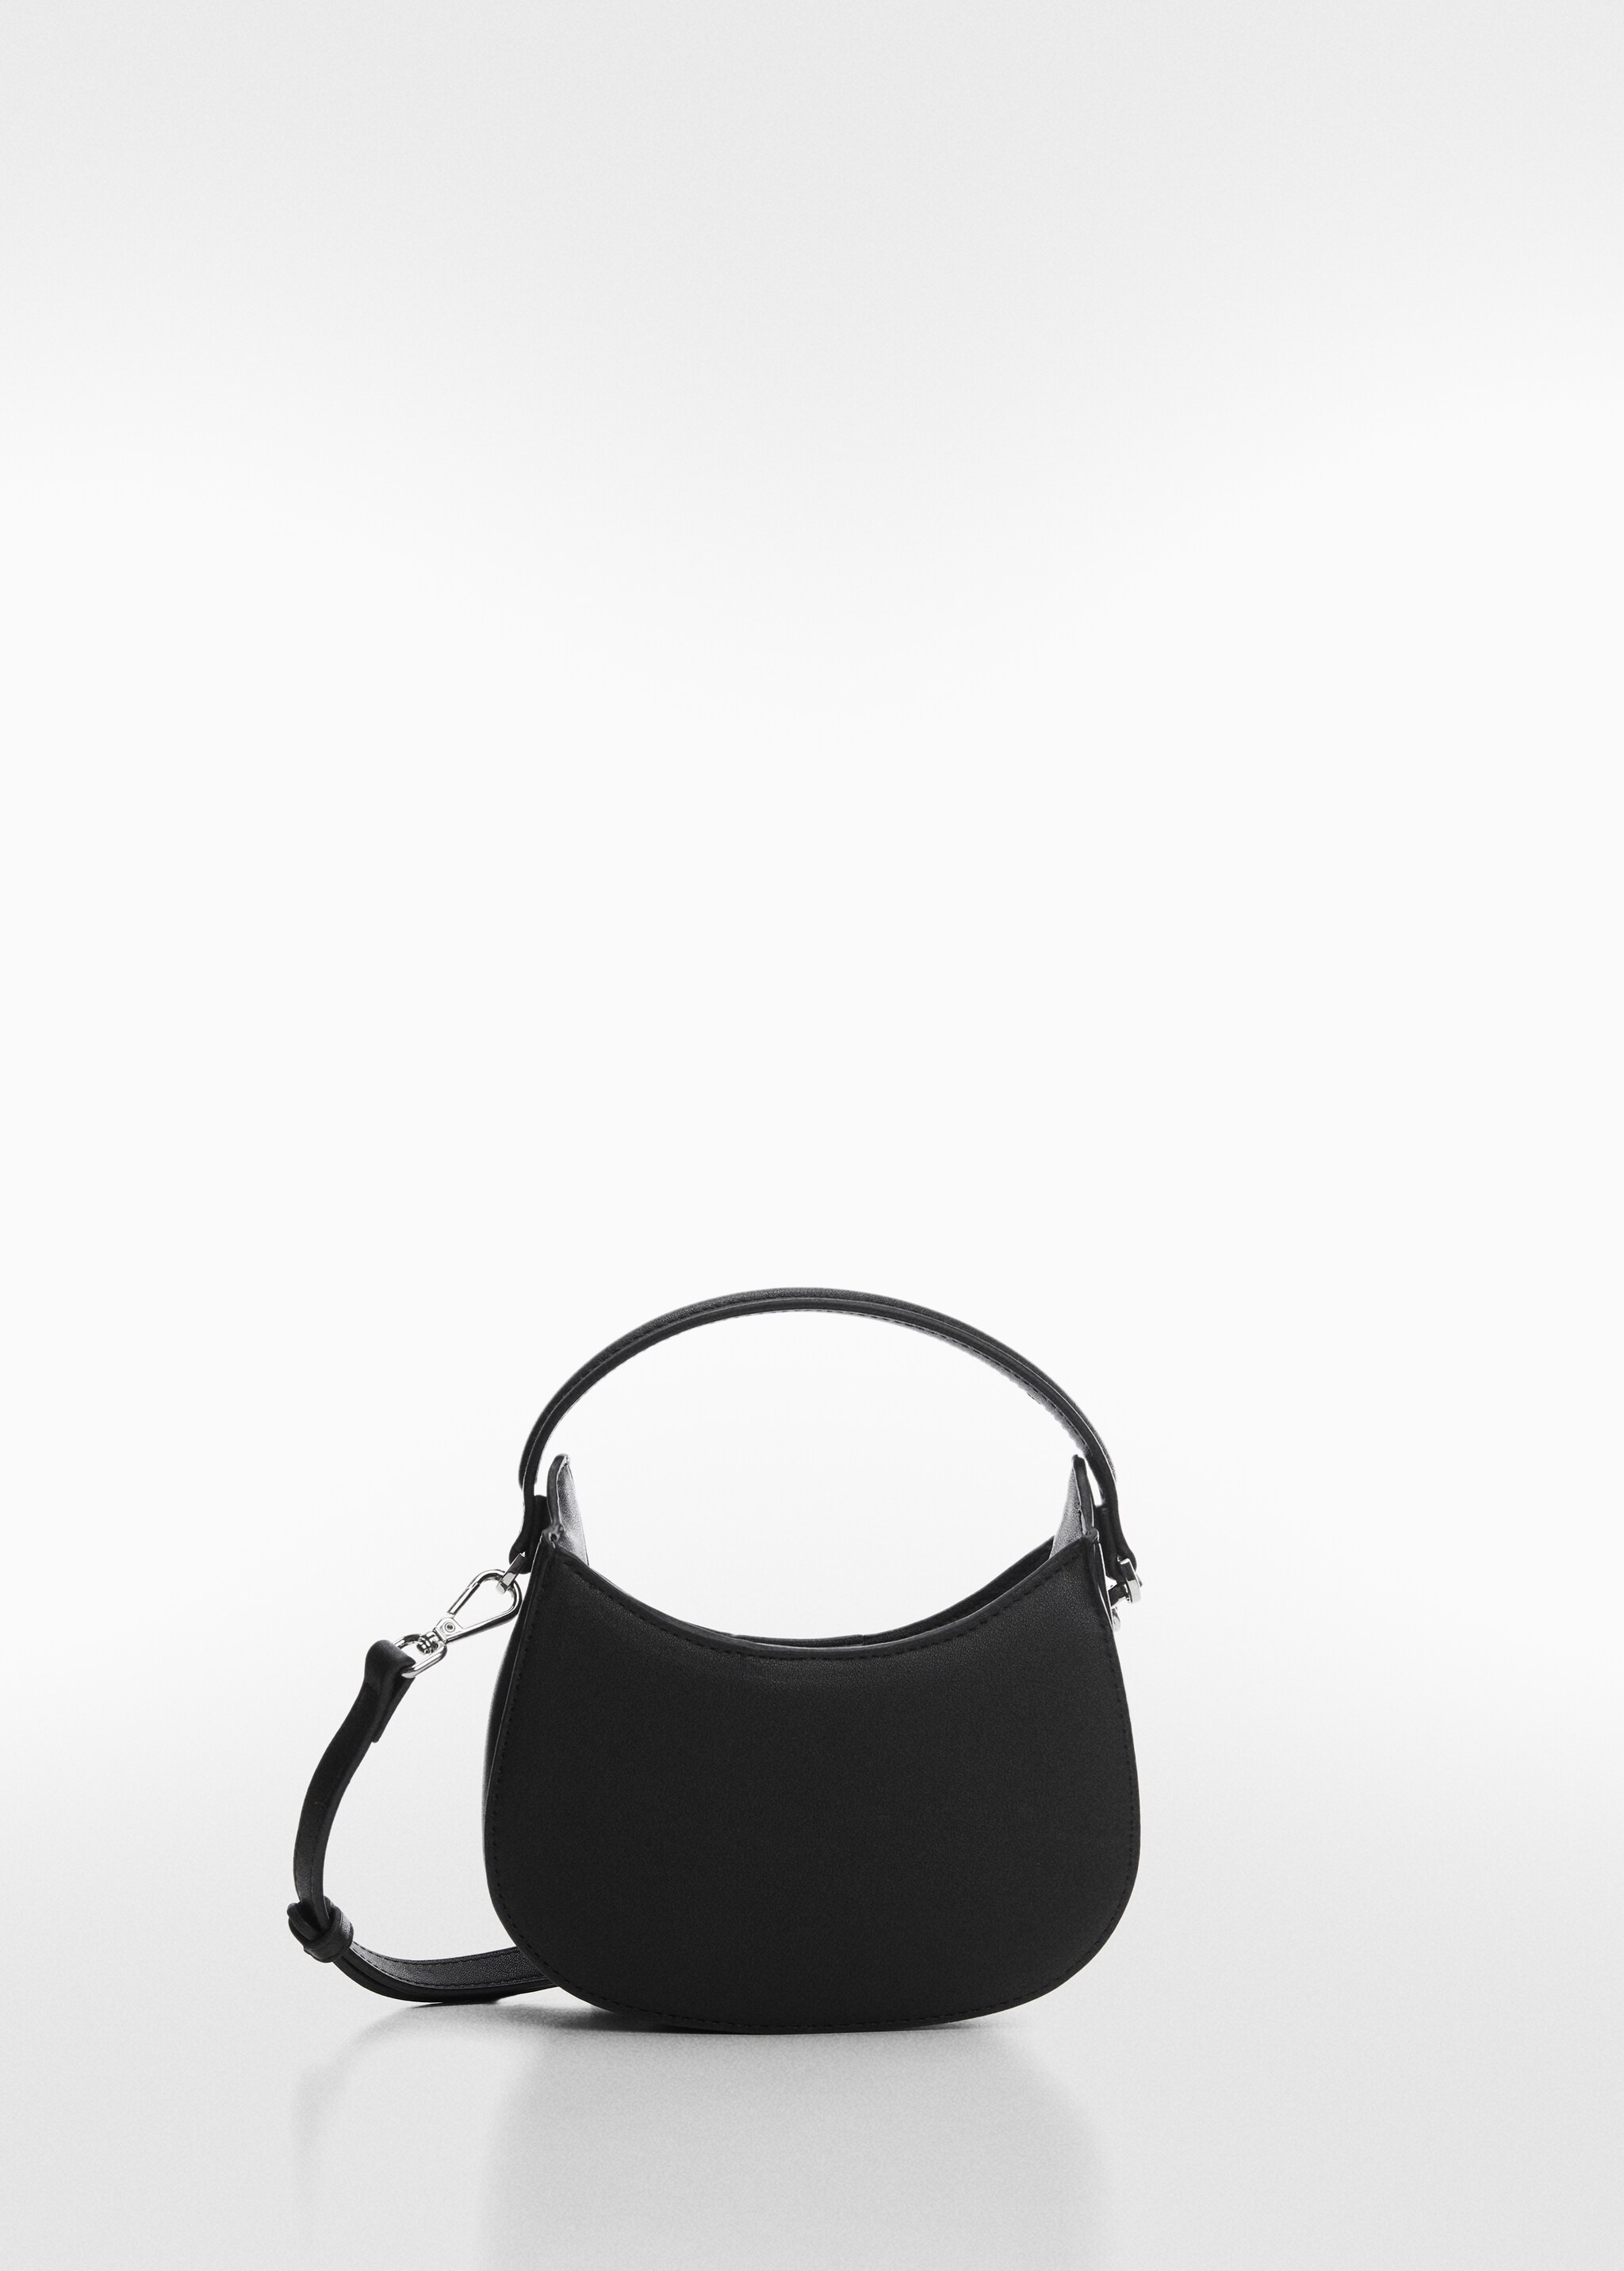 Shoulder bag with short handle - Article without model